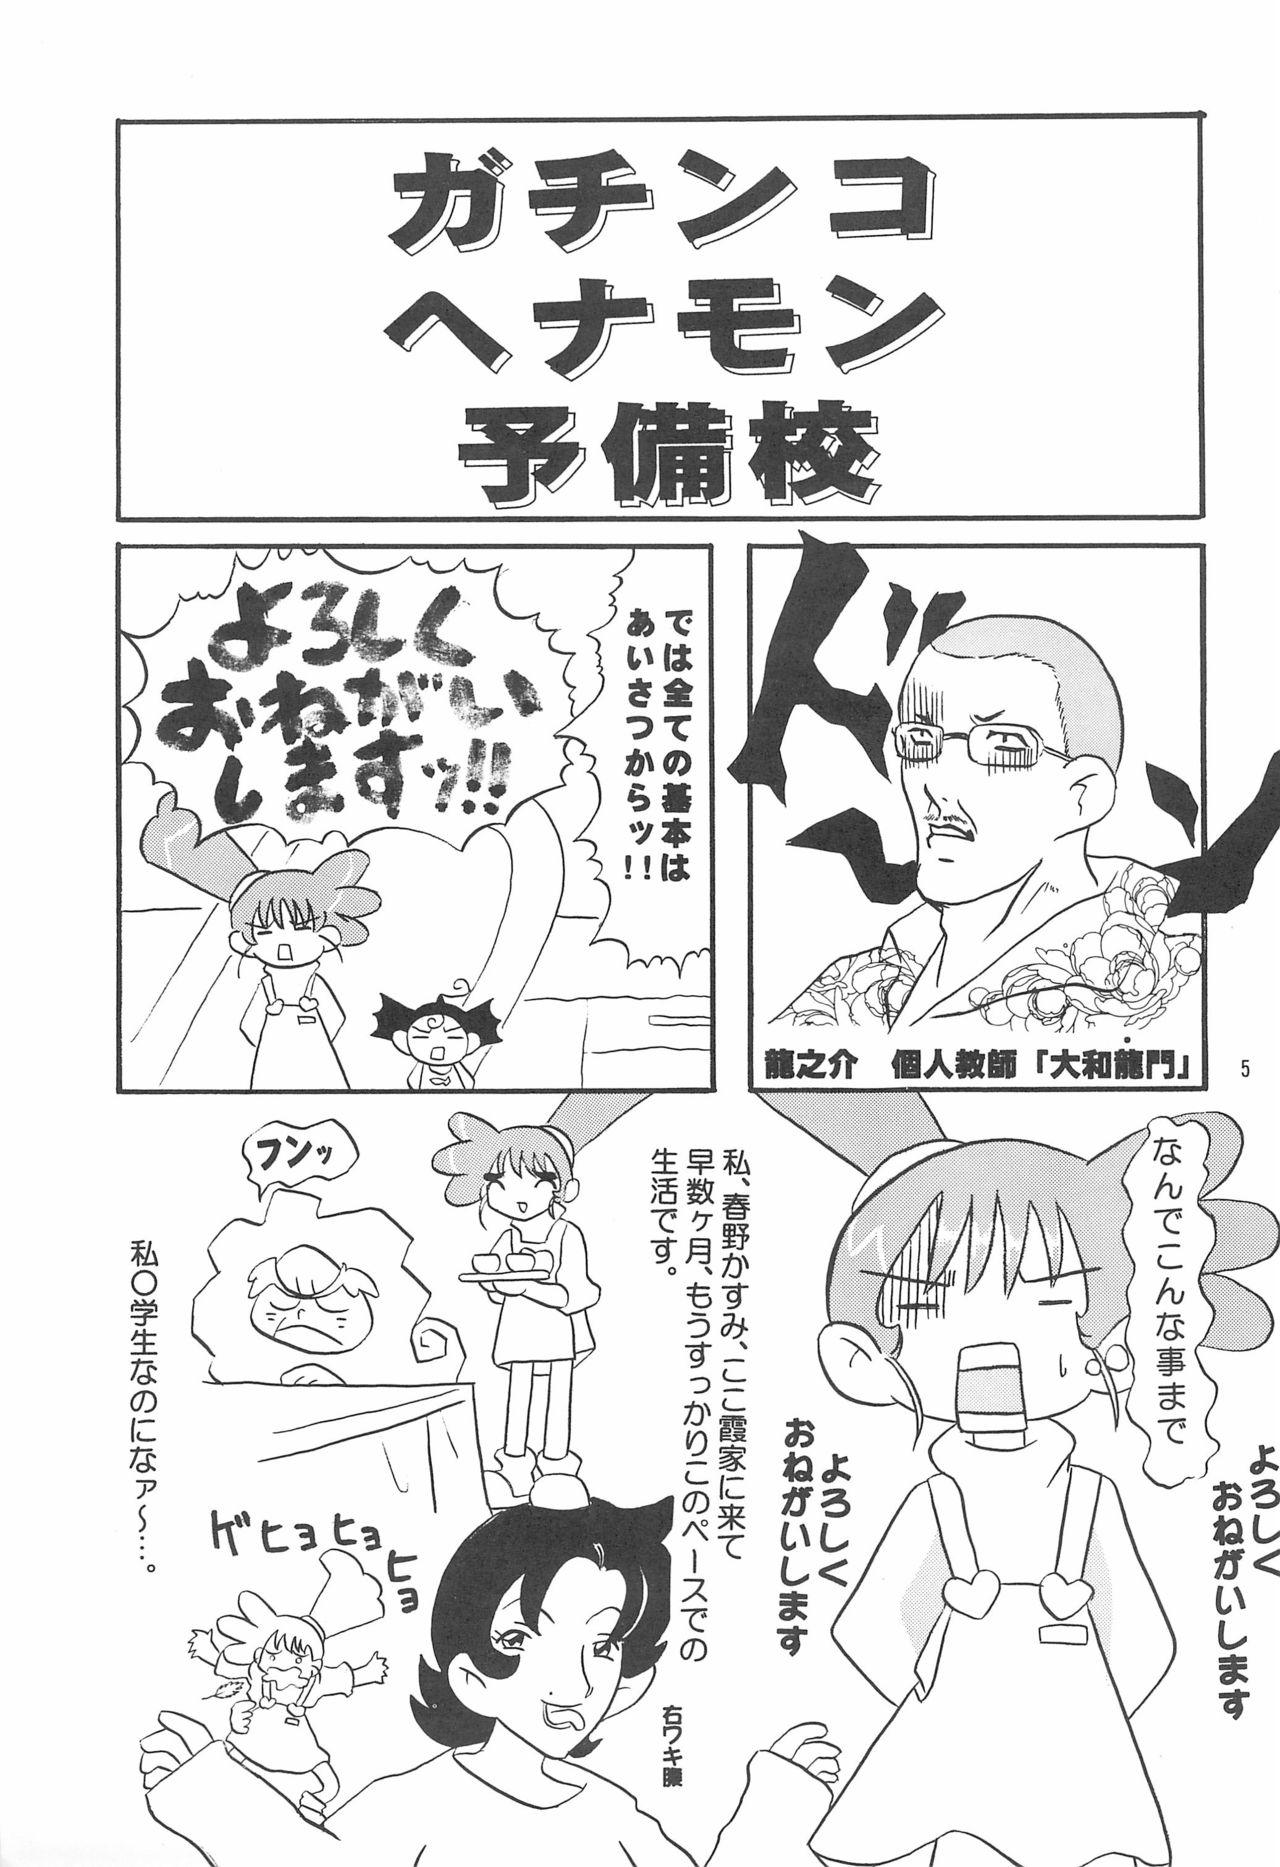 Dykes Kasumiso - Kasumin Gets - Page 5